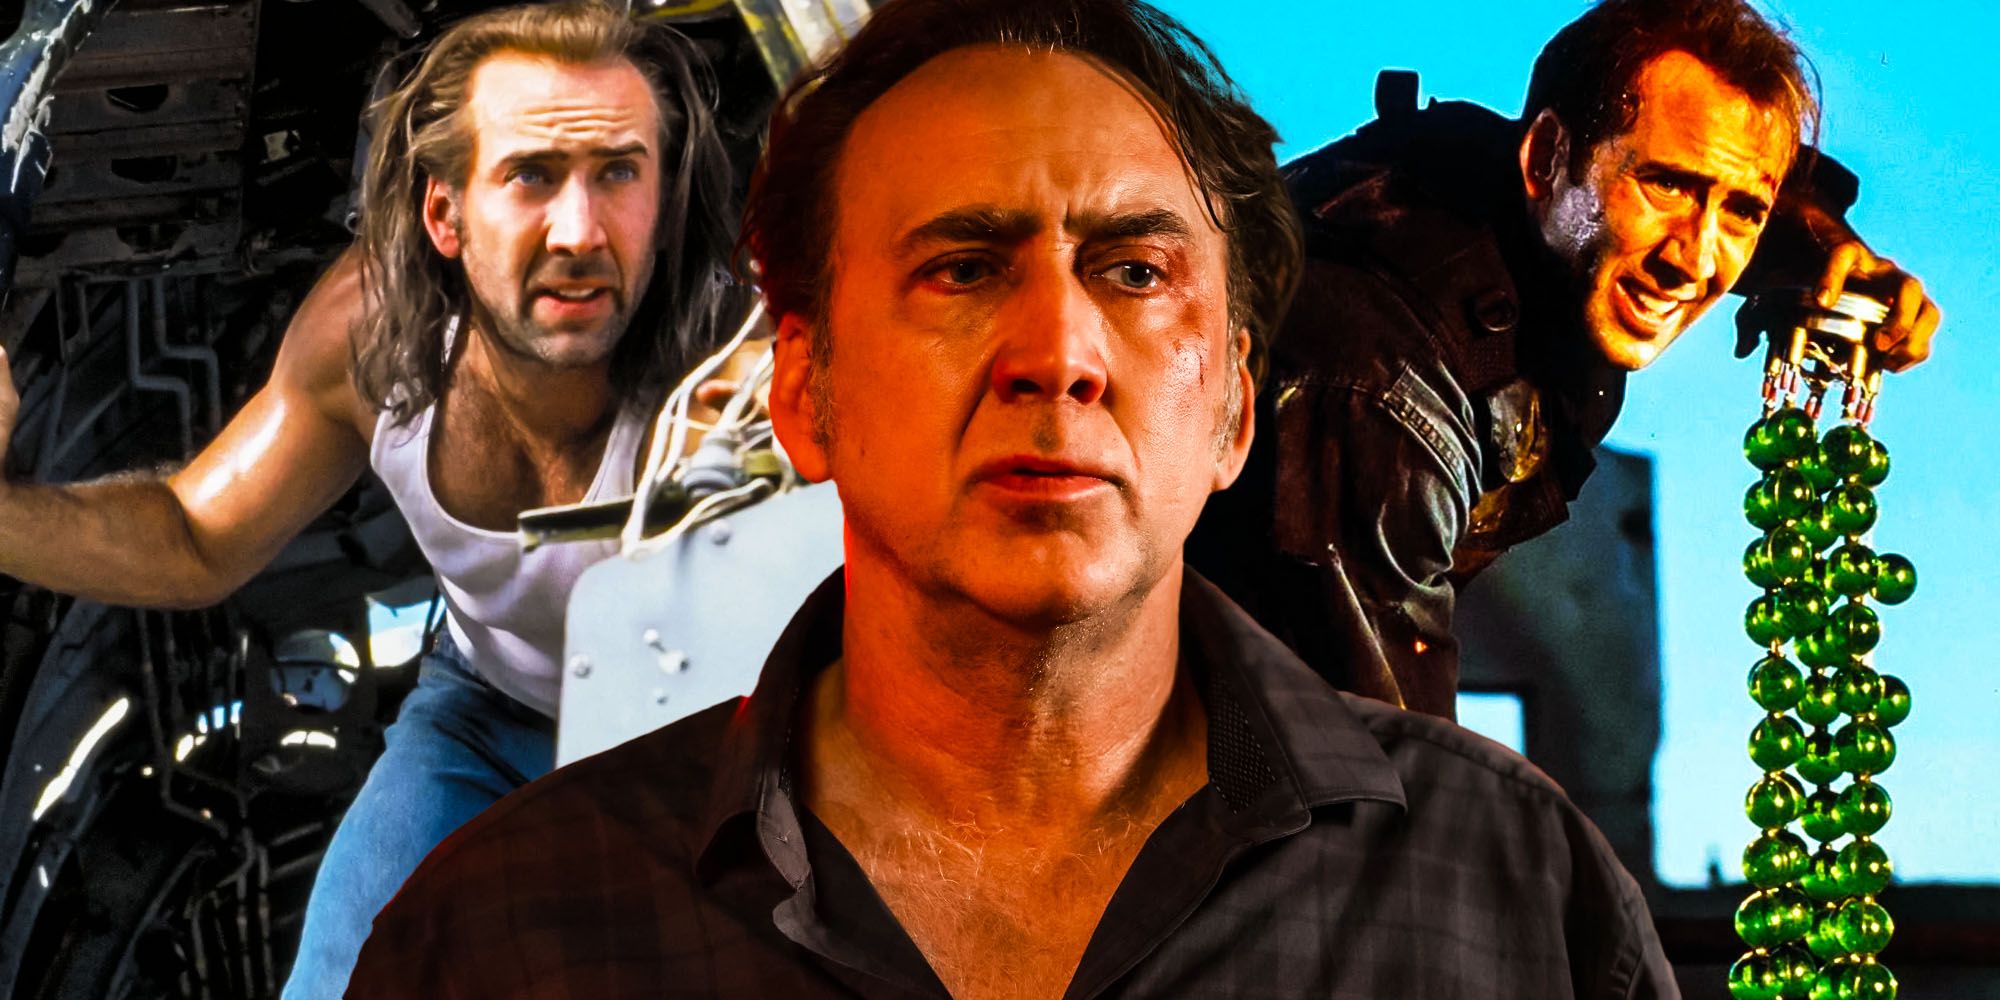 Nicolas Cage only make bad movies the rock conair